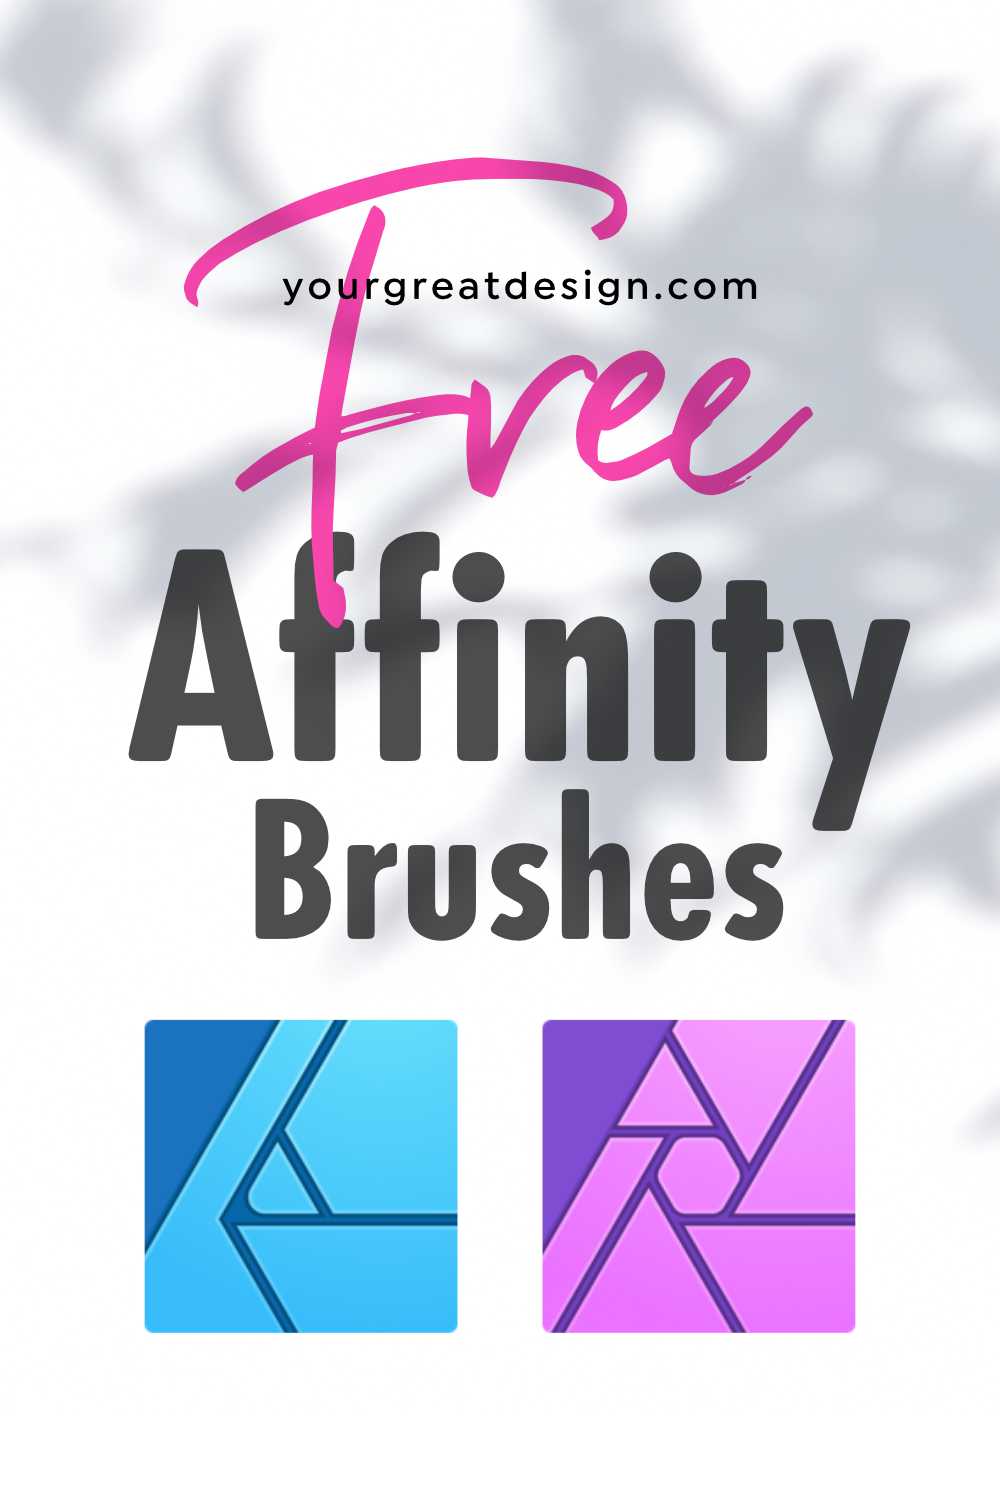 Download free brushes for Affinity Designer & Photo